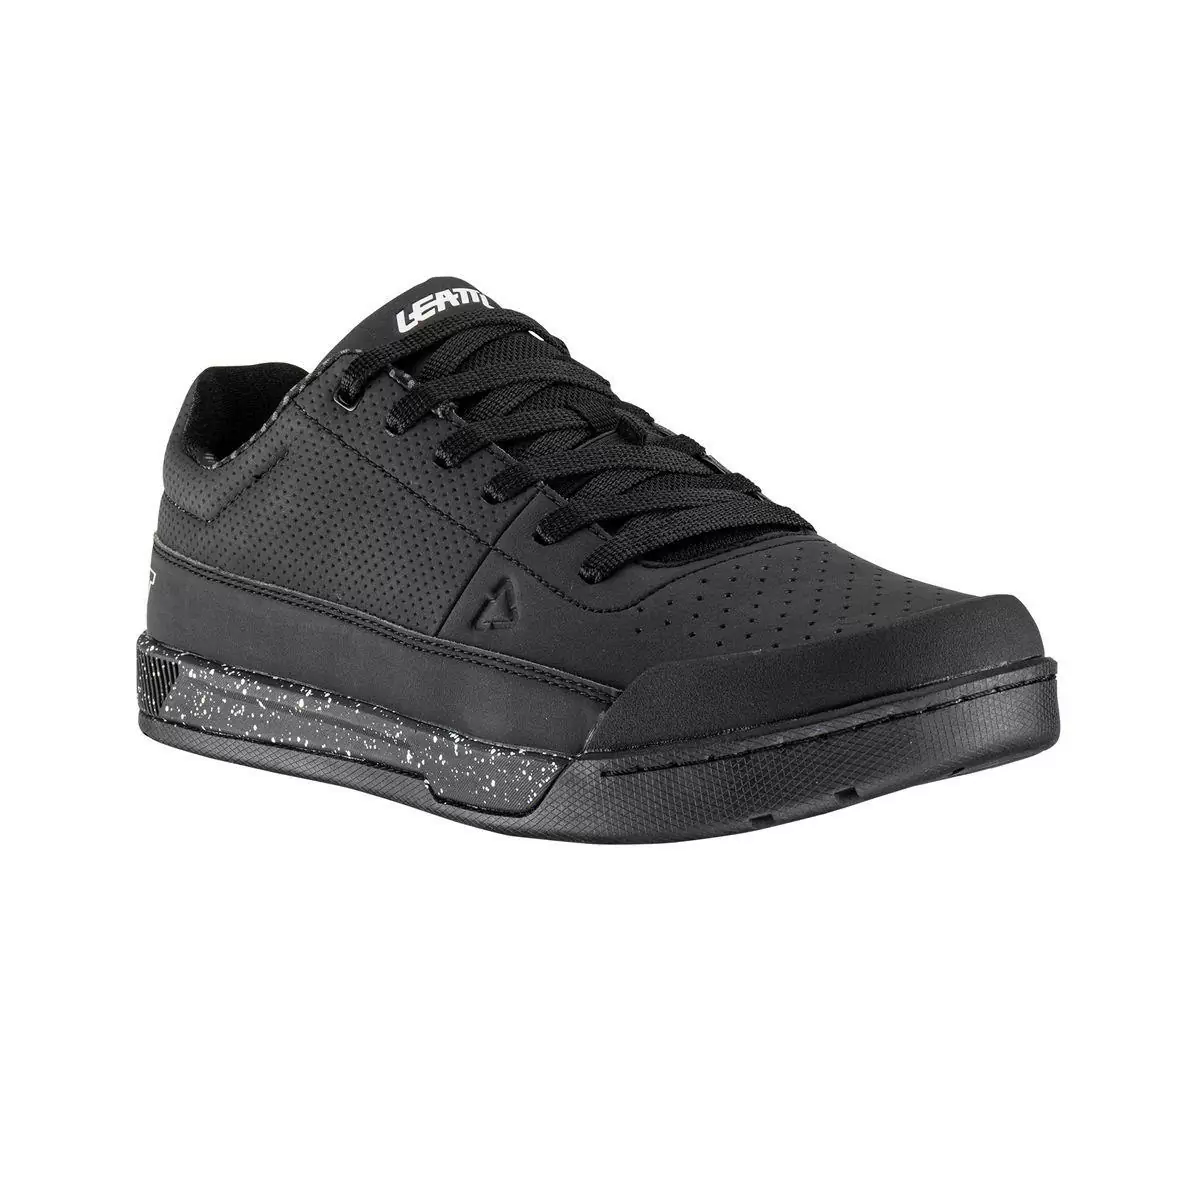 Mtb Shoes 2.0 Flat Black Size 44.5 #1